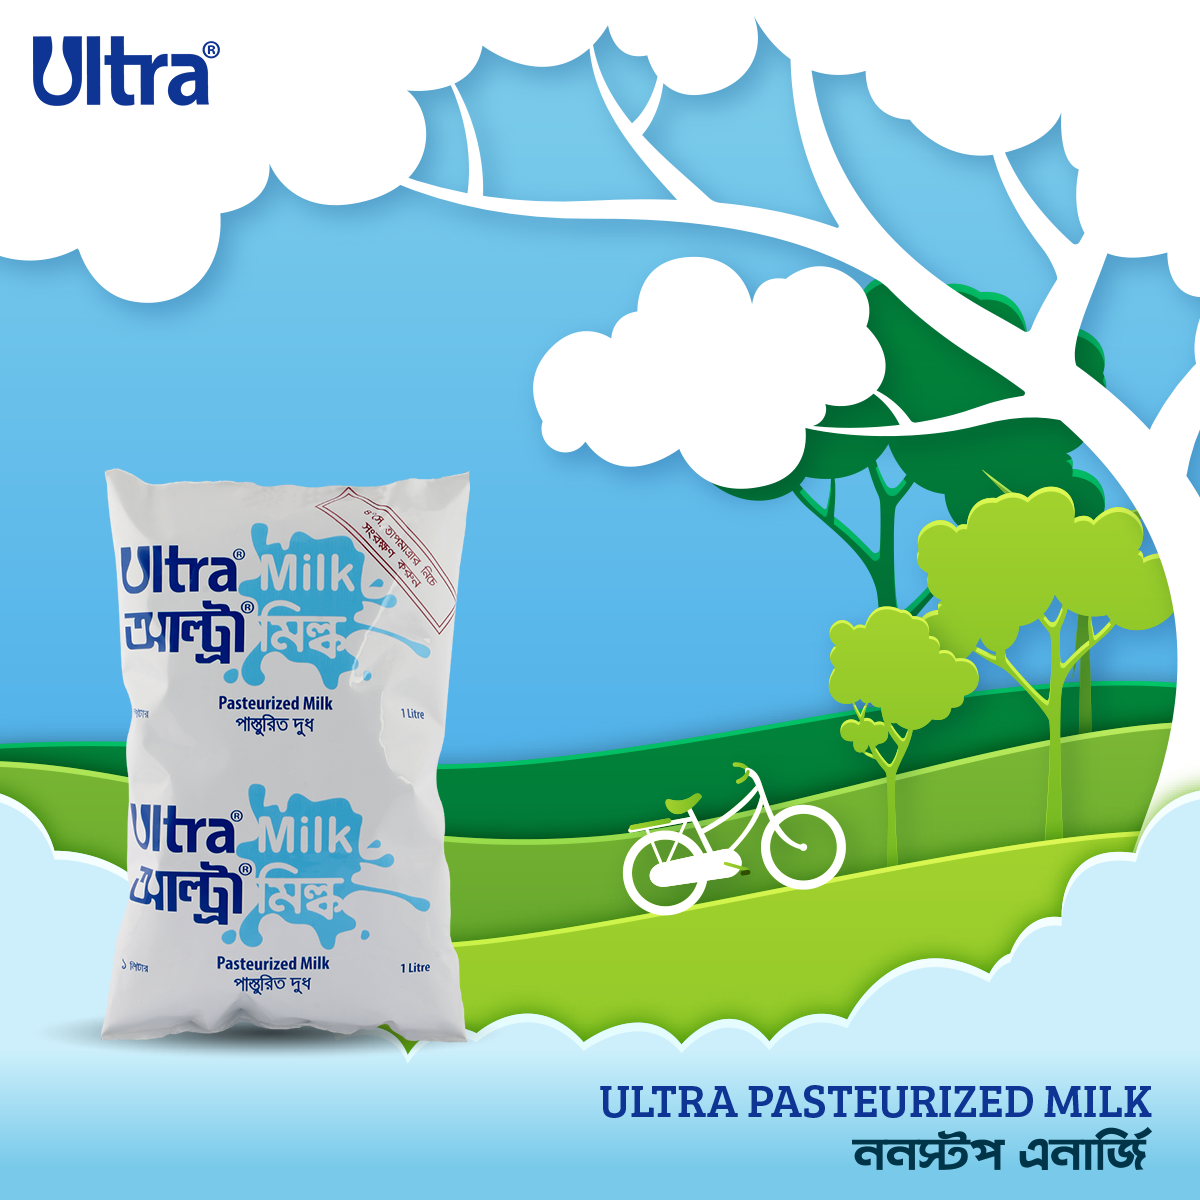 ultra-pasteurized-milk-mindshift-ltd